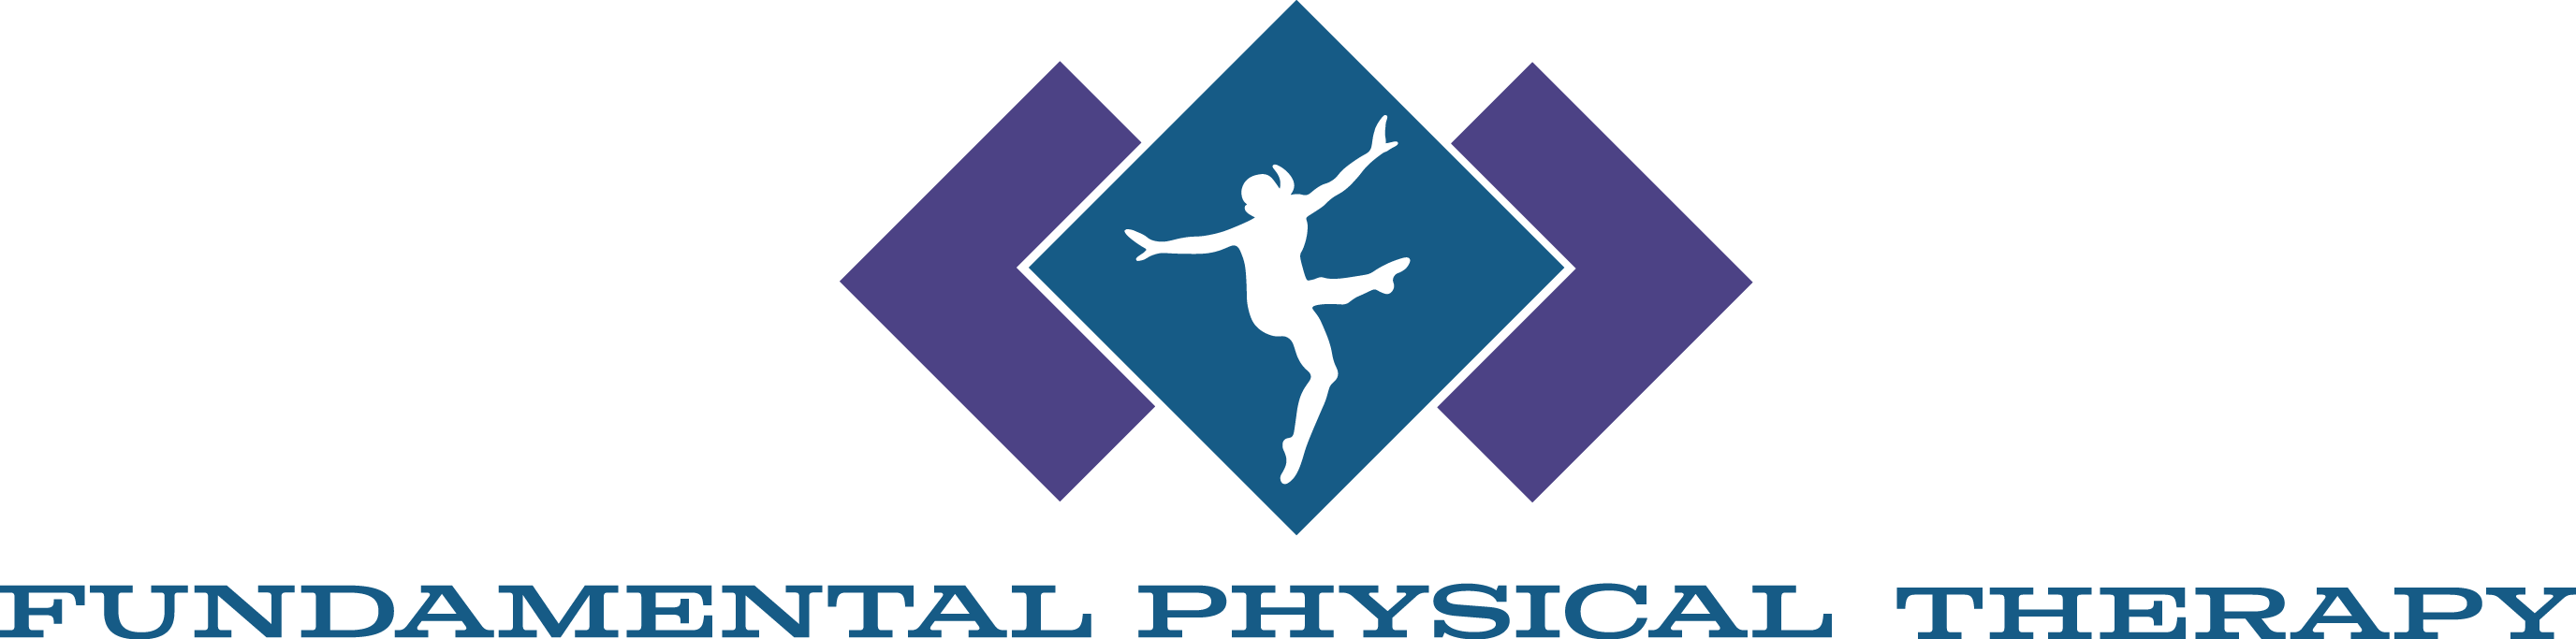 Fundamental Physical Therapy logo